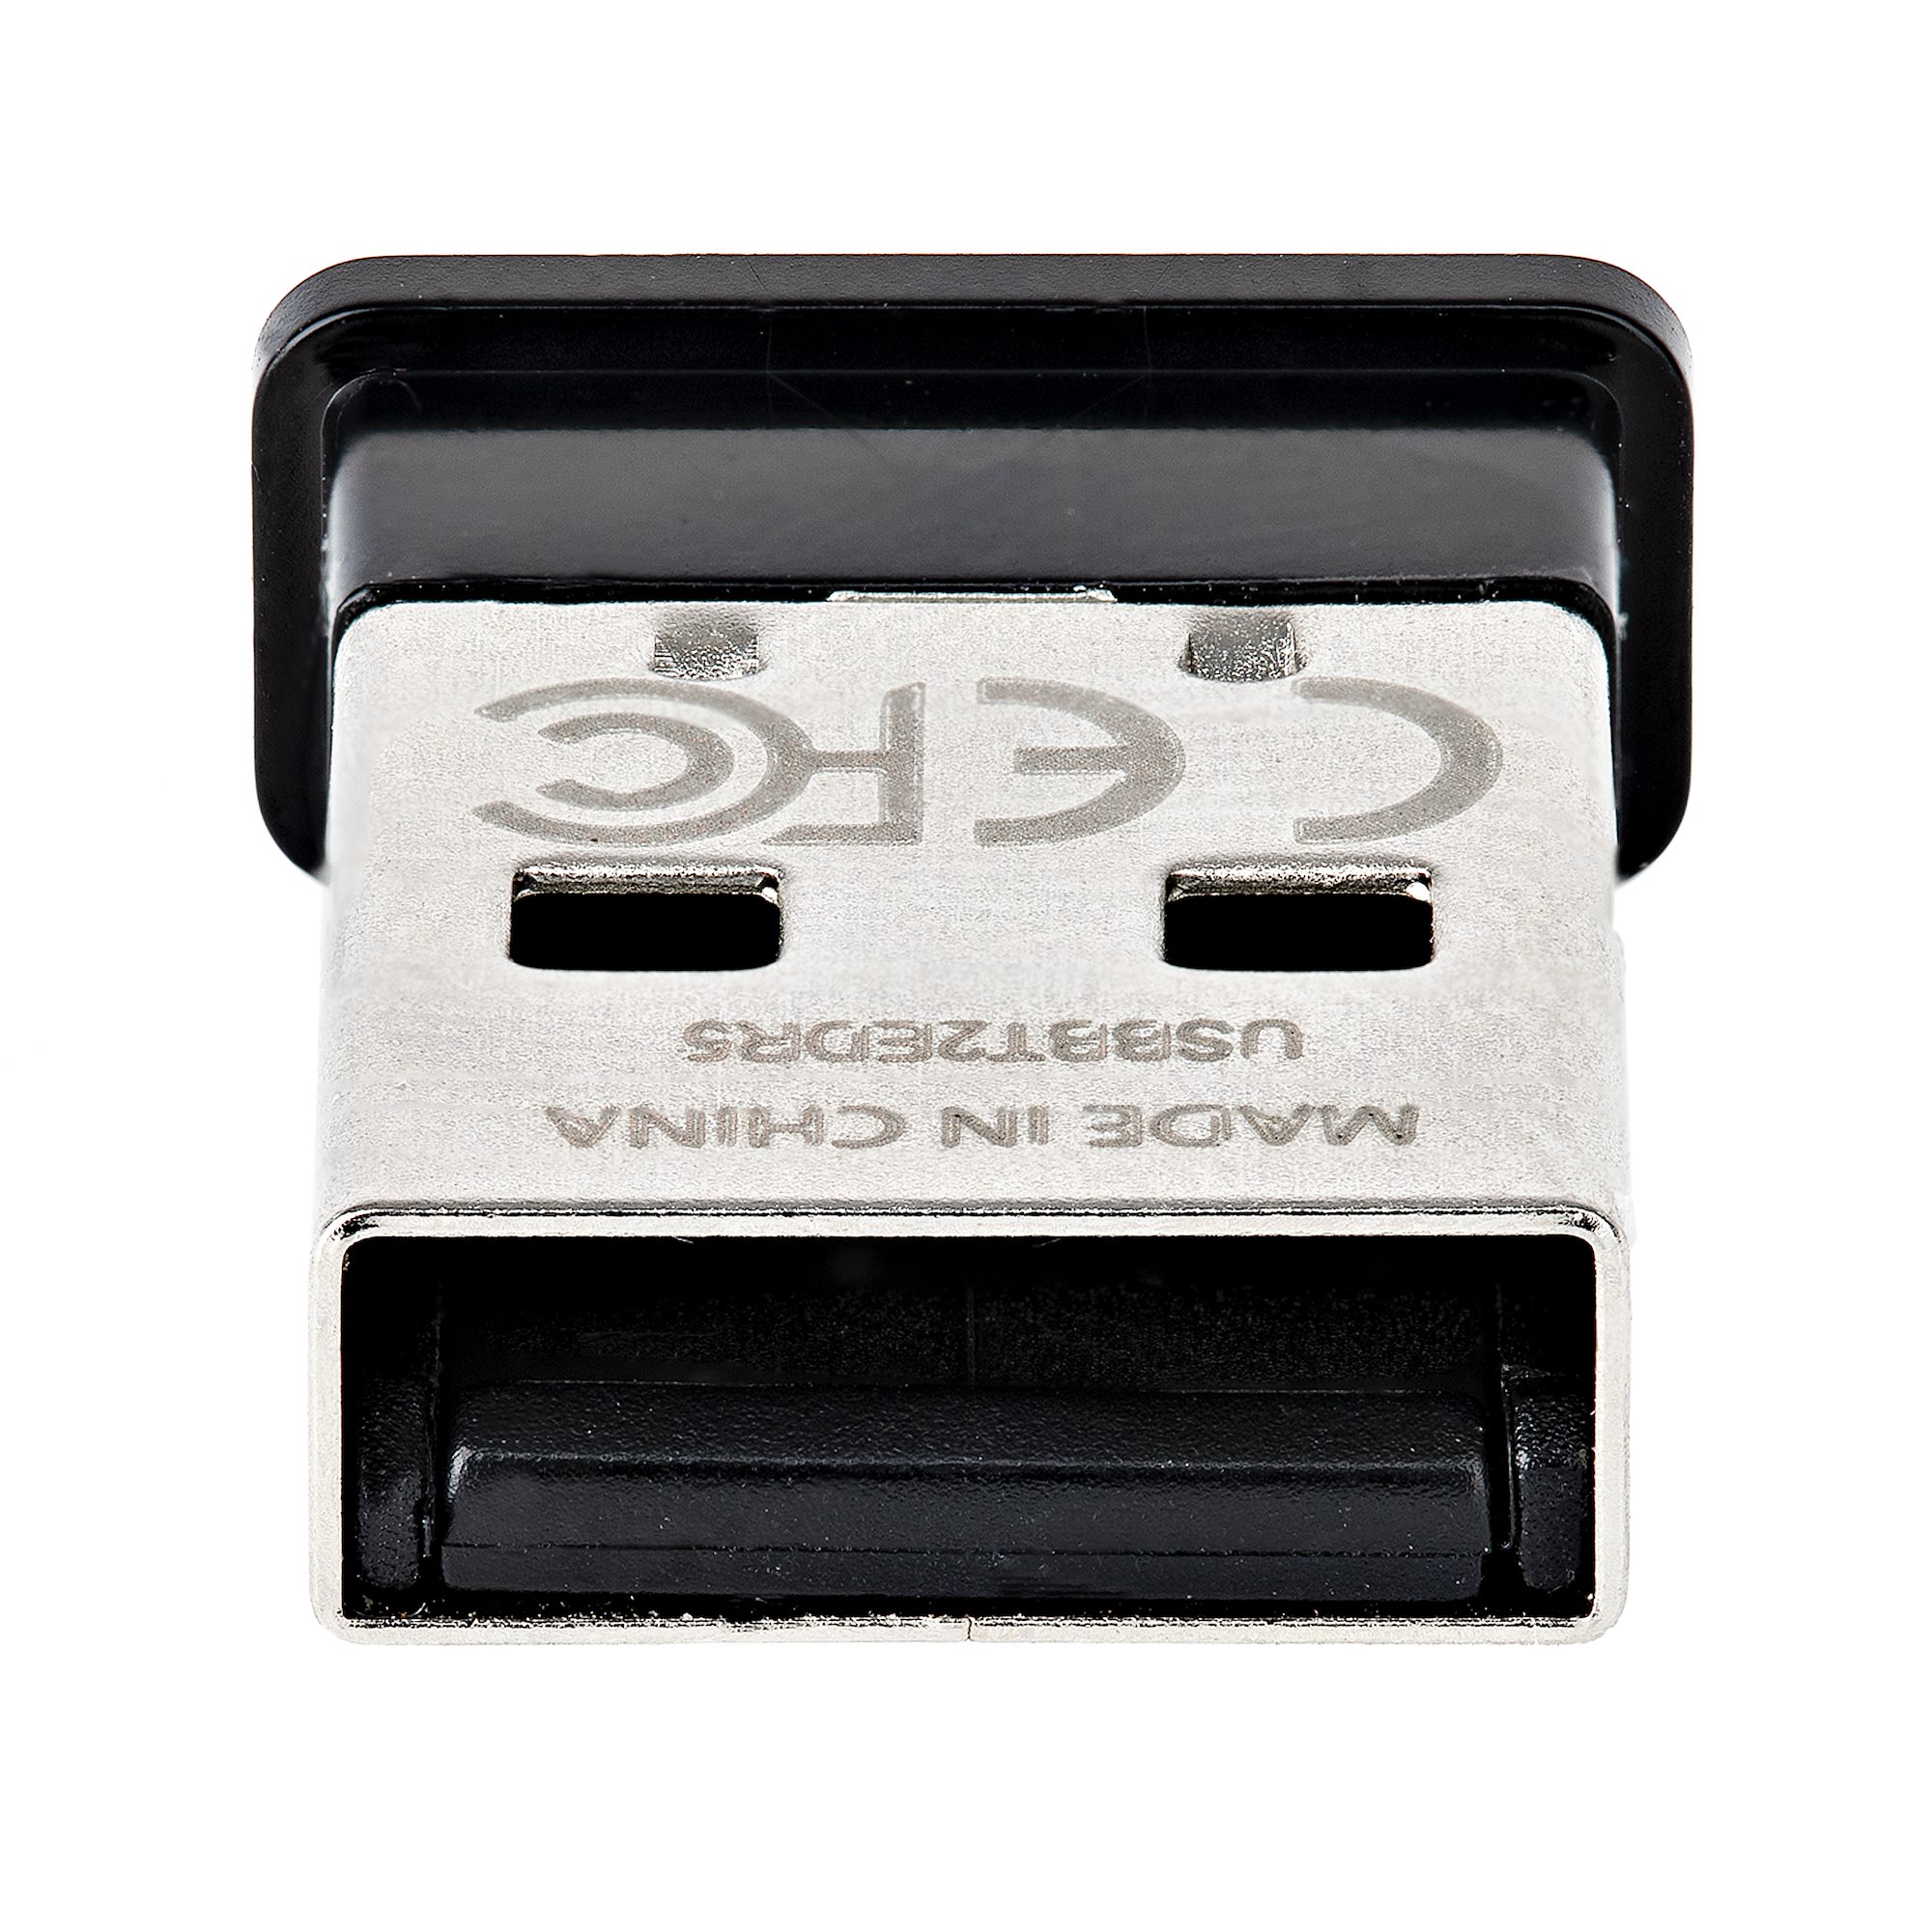 Adaptateur USB Bluetooth 5.0